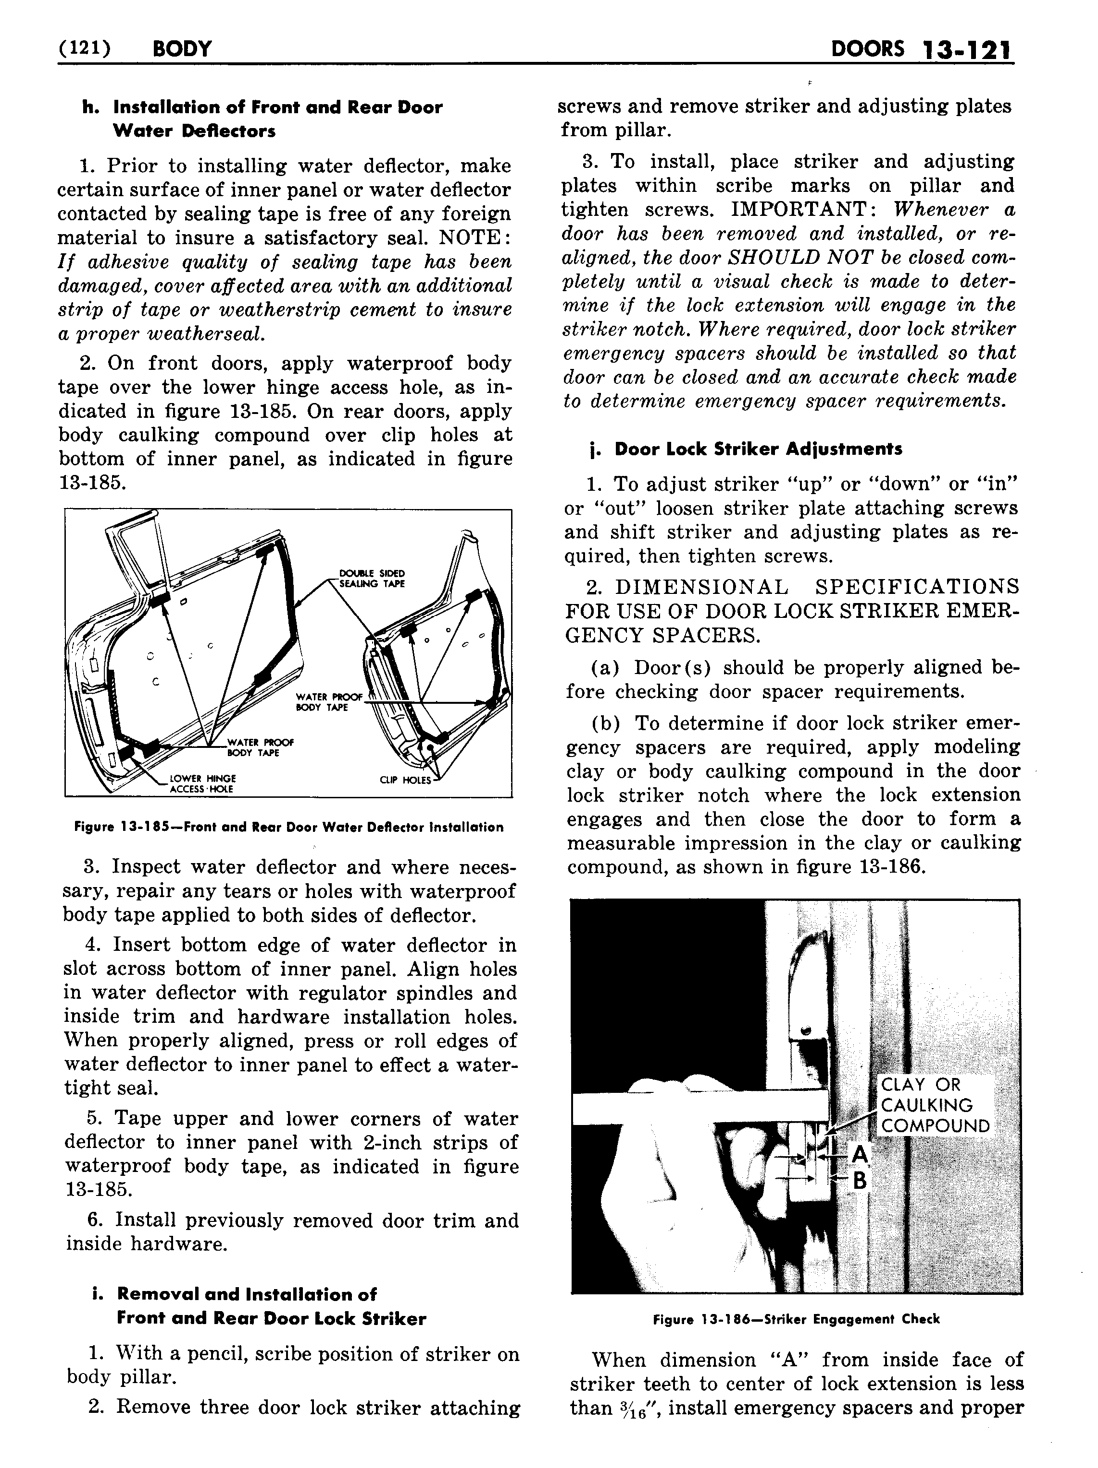 n_1957 Buick Body Service Manual-123-123.jpg